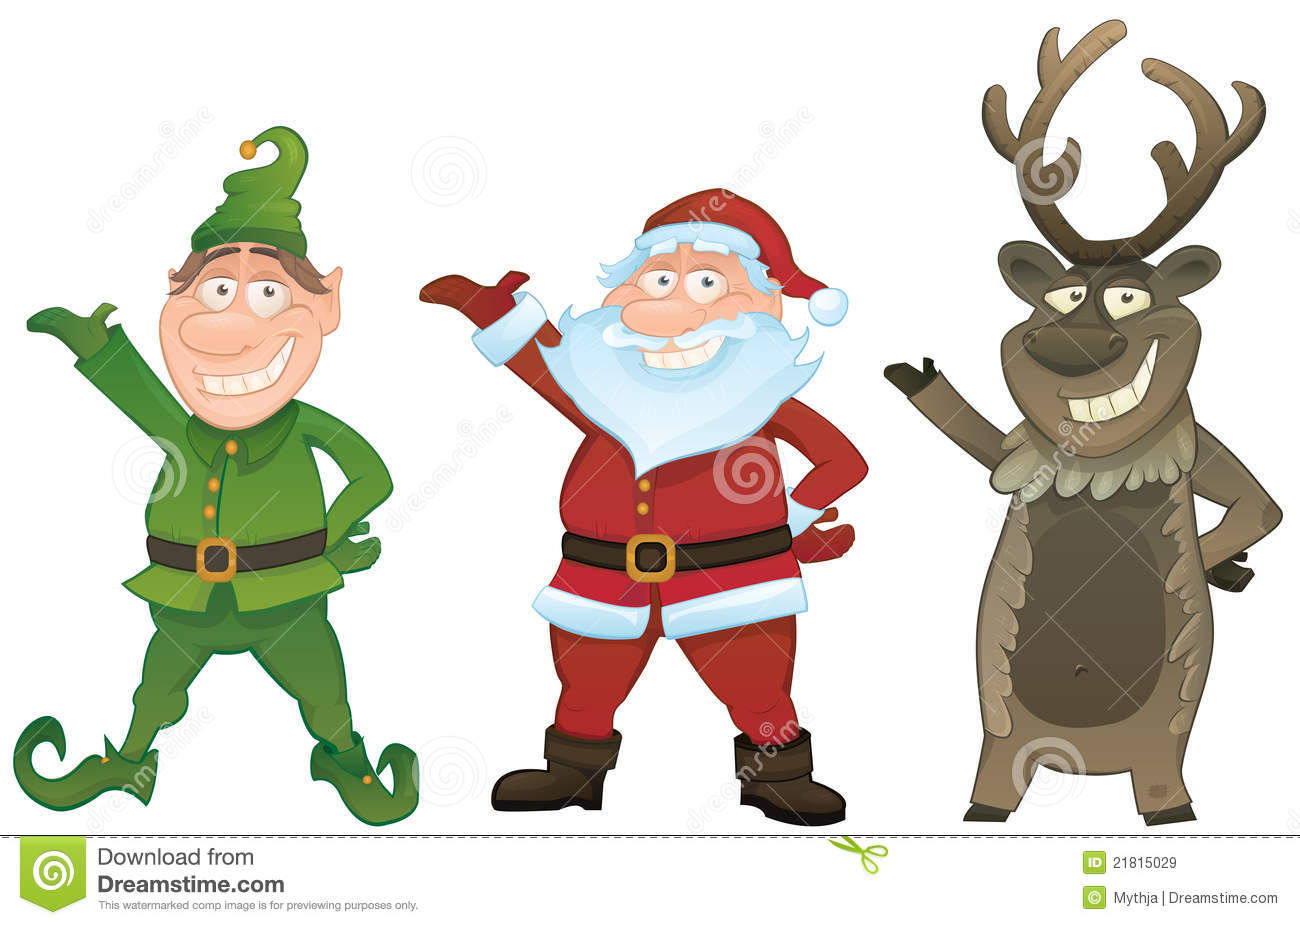 Santa and Elf Rudolph